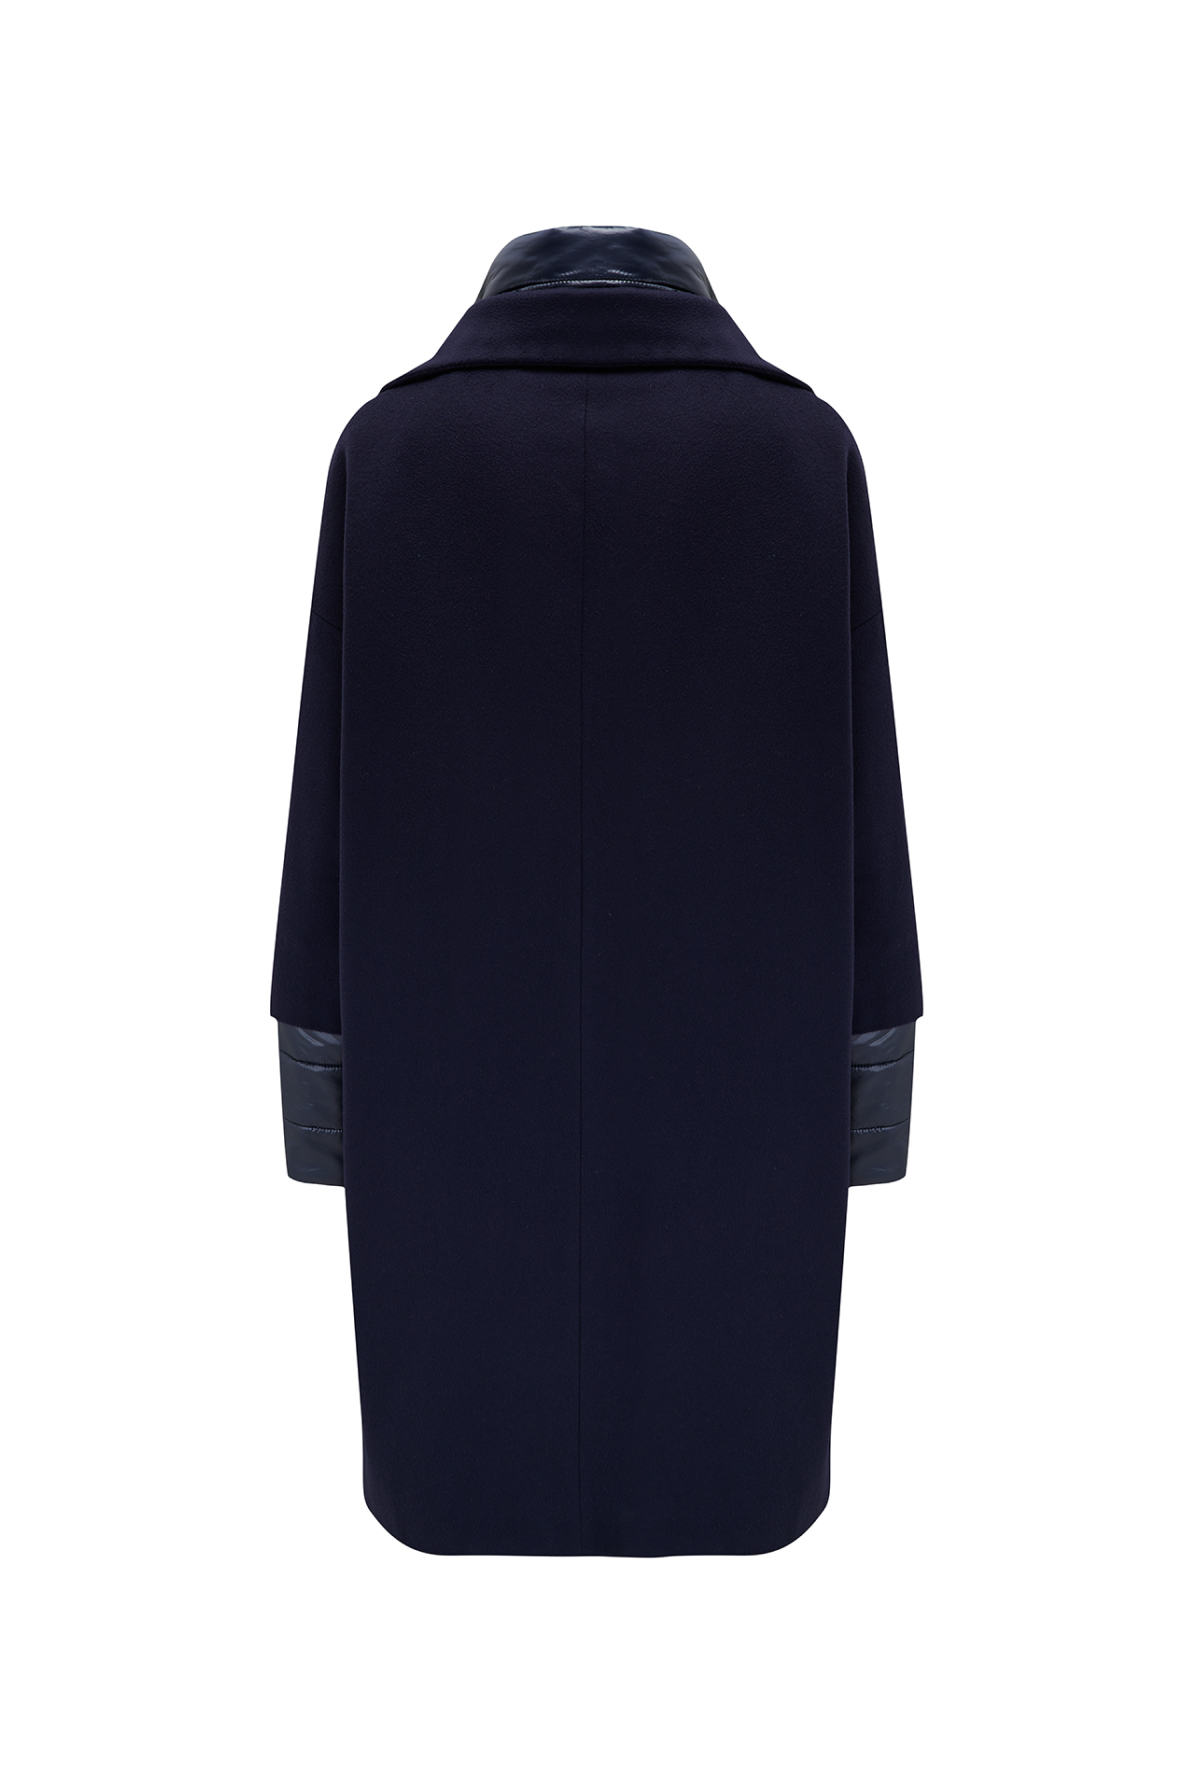 Herno Women’s Wool & Nylon Coat Blue - Back View